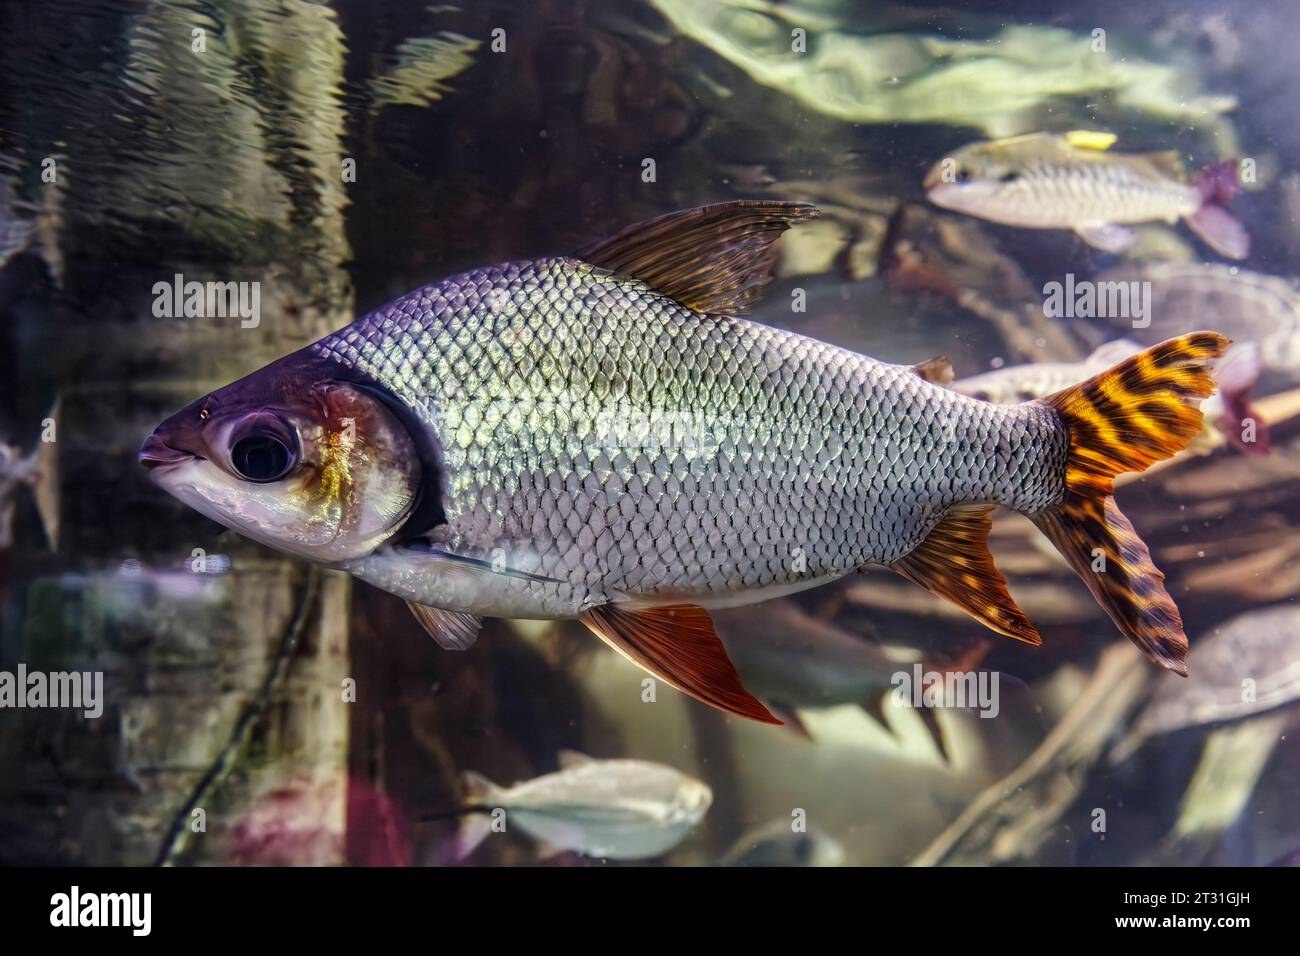 Silver prochilodus (Semaprochilodus taeniurus), Amazon freshwater fish Stock Photo